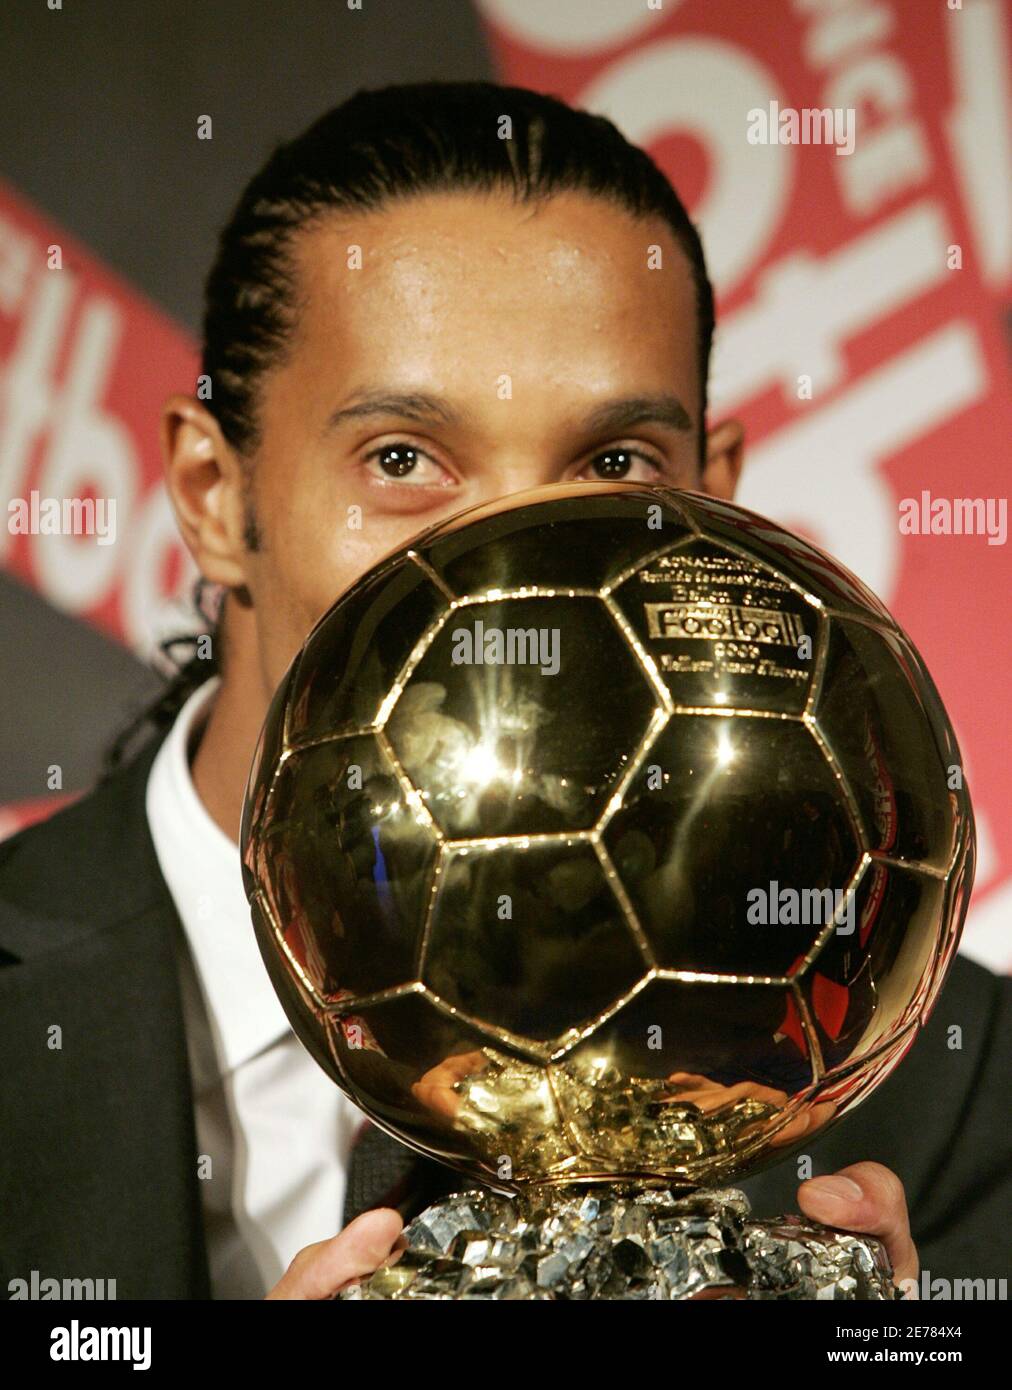 Brazilian soccer star Ronaldinho peers above his Ballon d'Or (Golden Ball)  award as European Footballer of the Year during a press conference in Paris  November 28, 2005. Ronaldinho won the award, celebrating